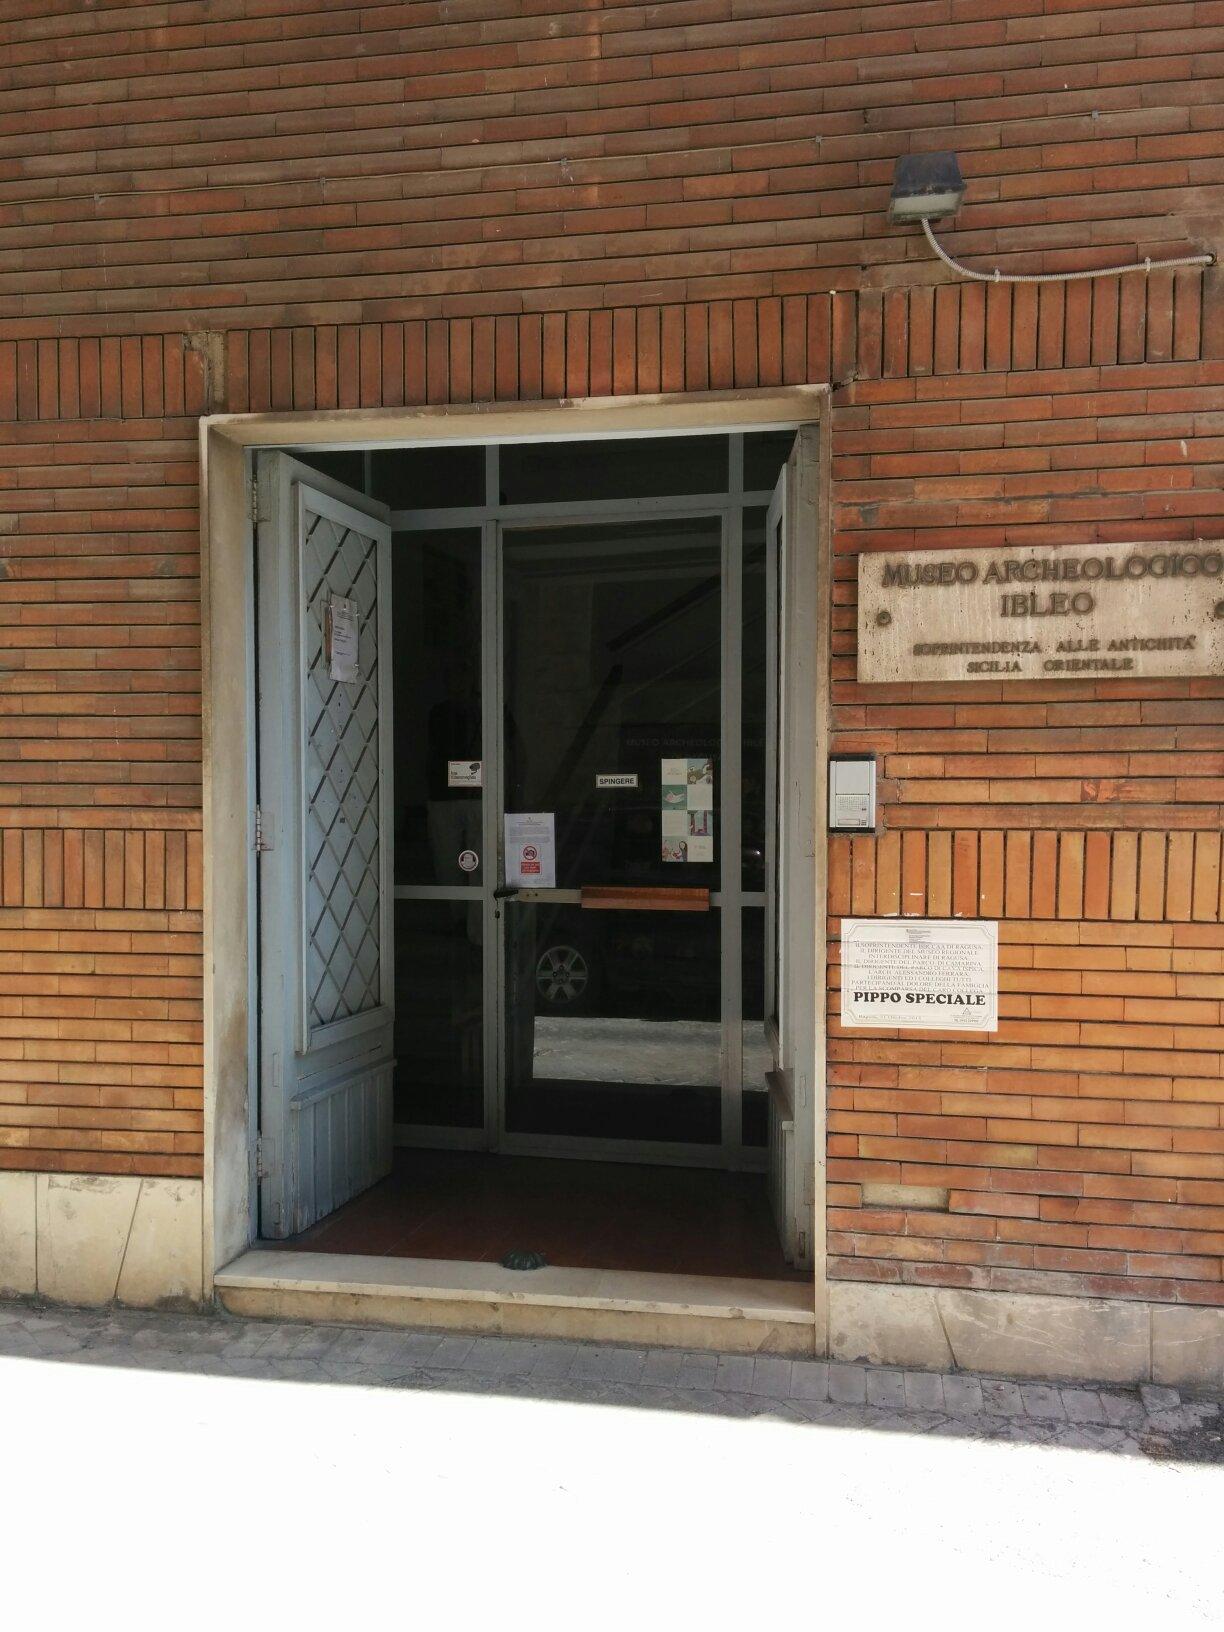 Museo archeologico di Ragusa